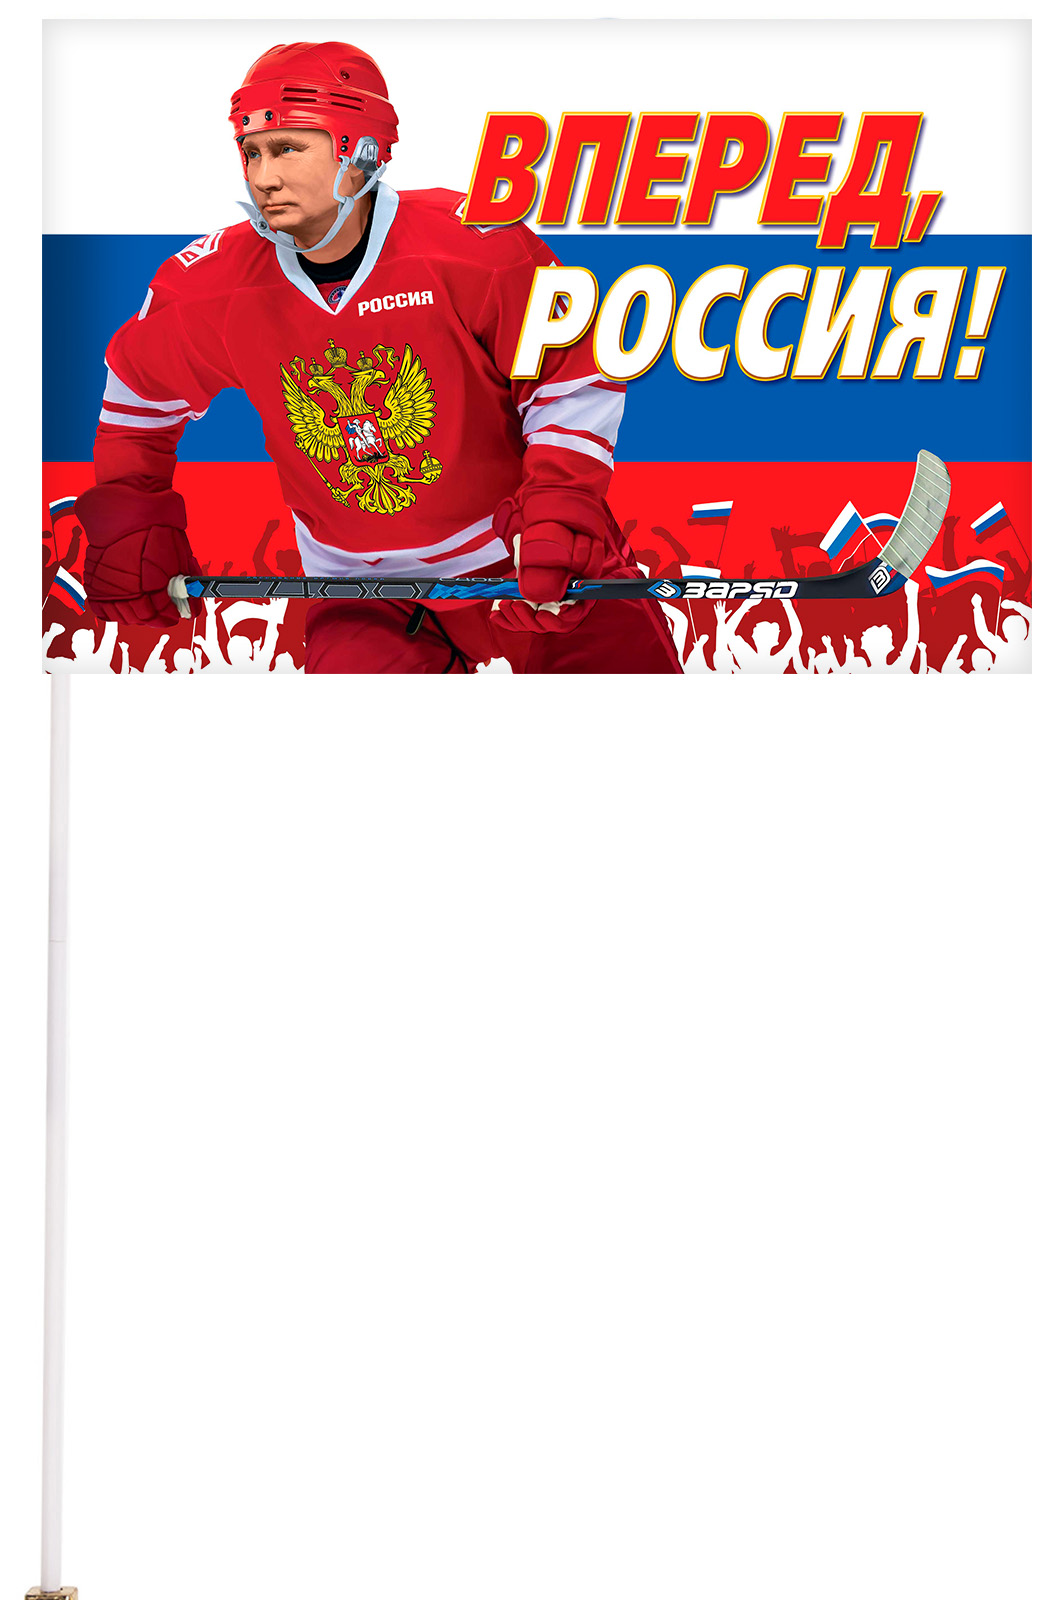 Недорогие флажки на палочке Вперед, Россия